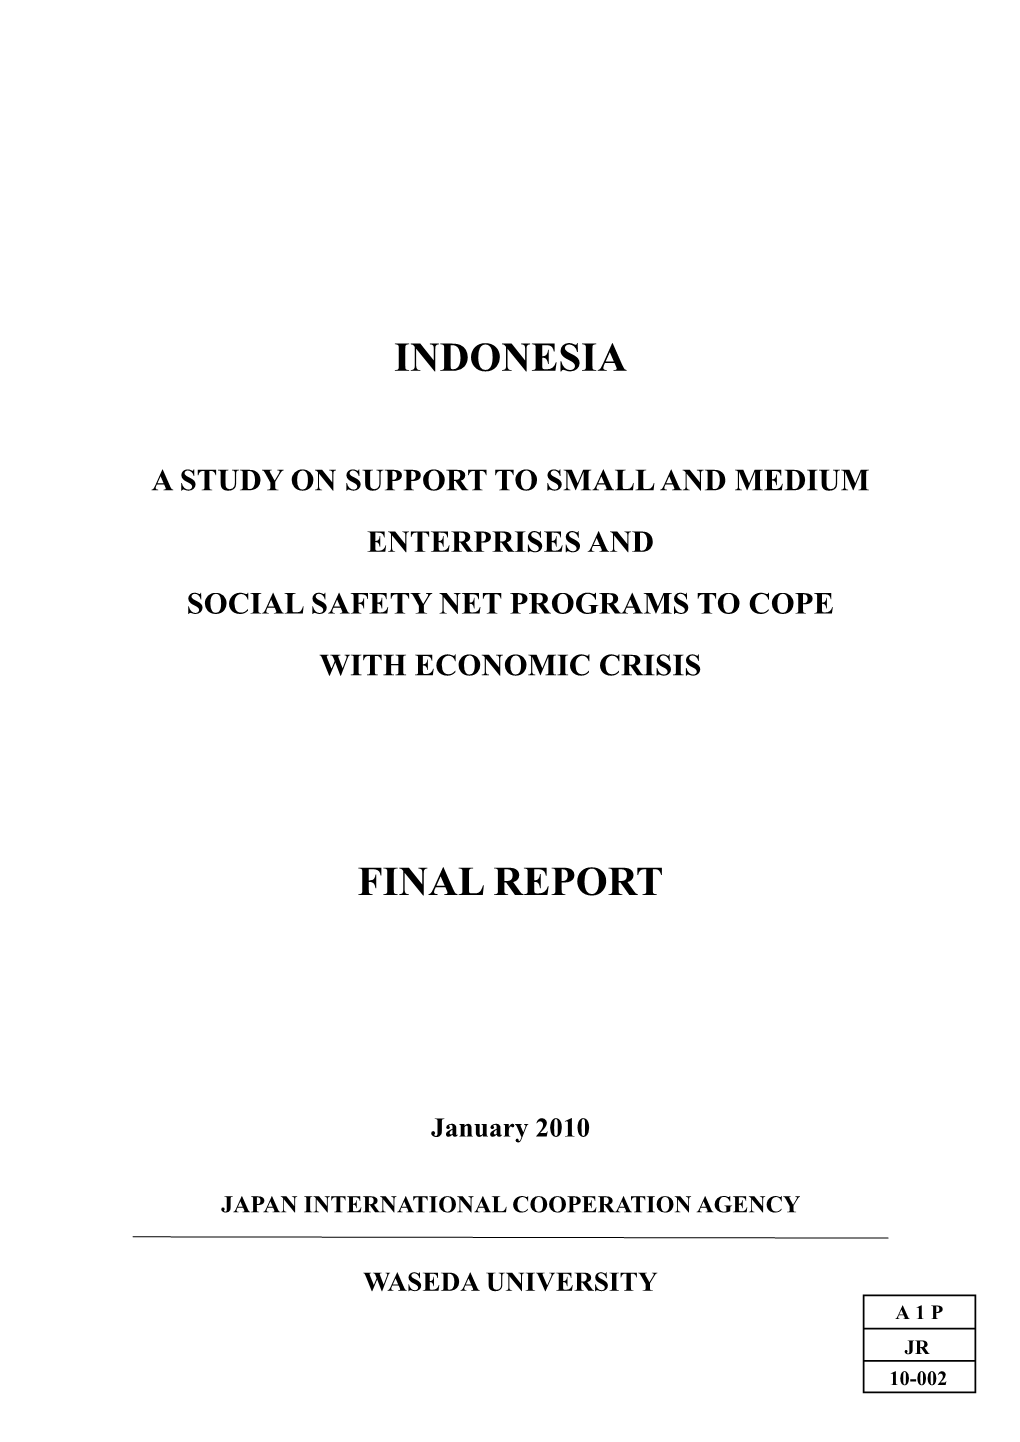 Indonesia Final Report